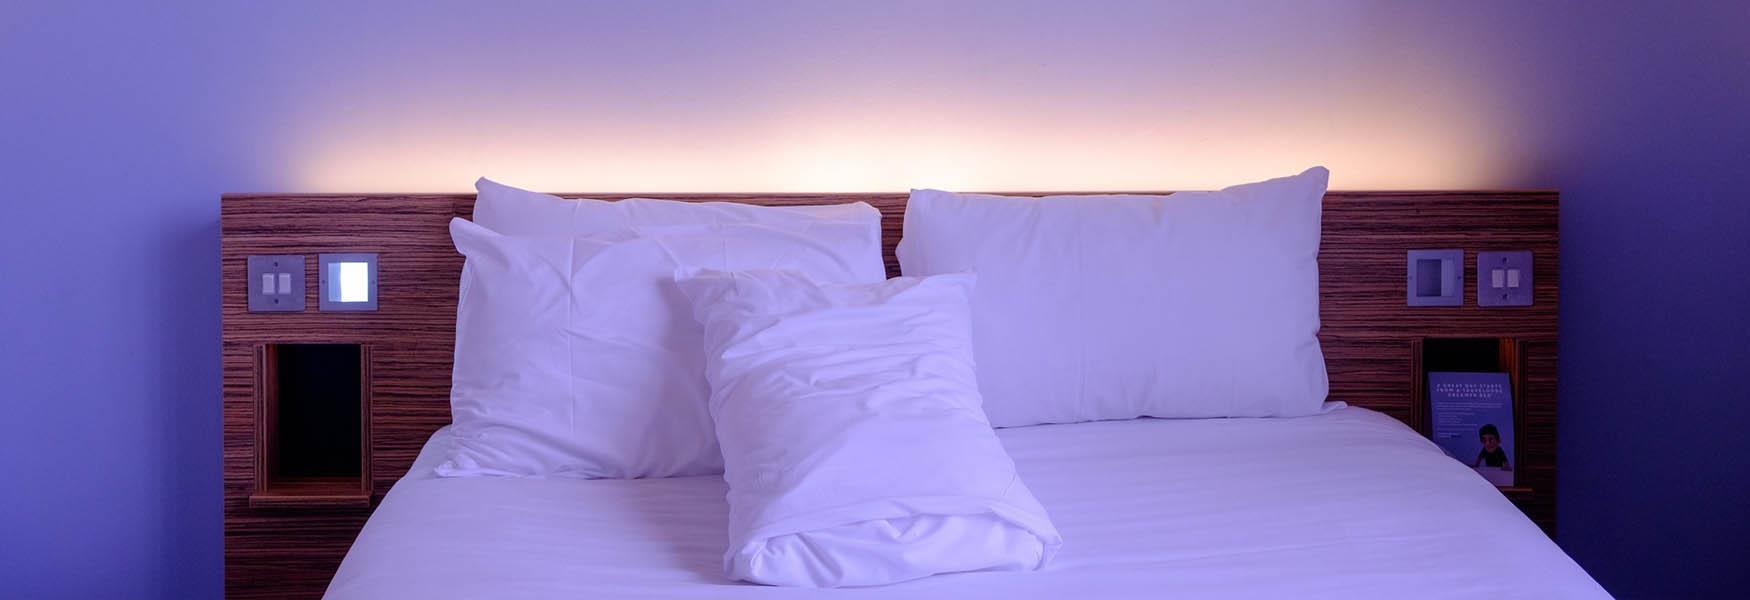 hotel bedroom bedfordshire